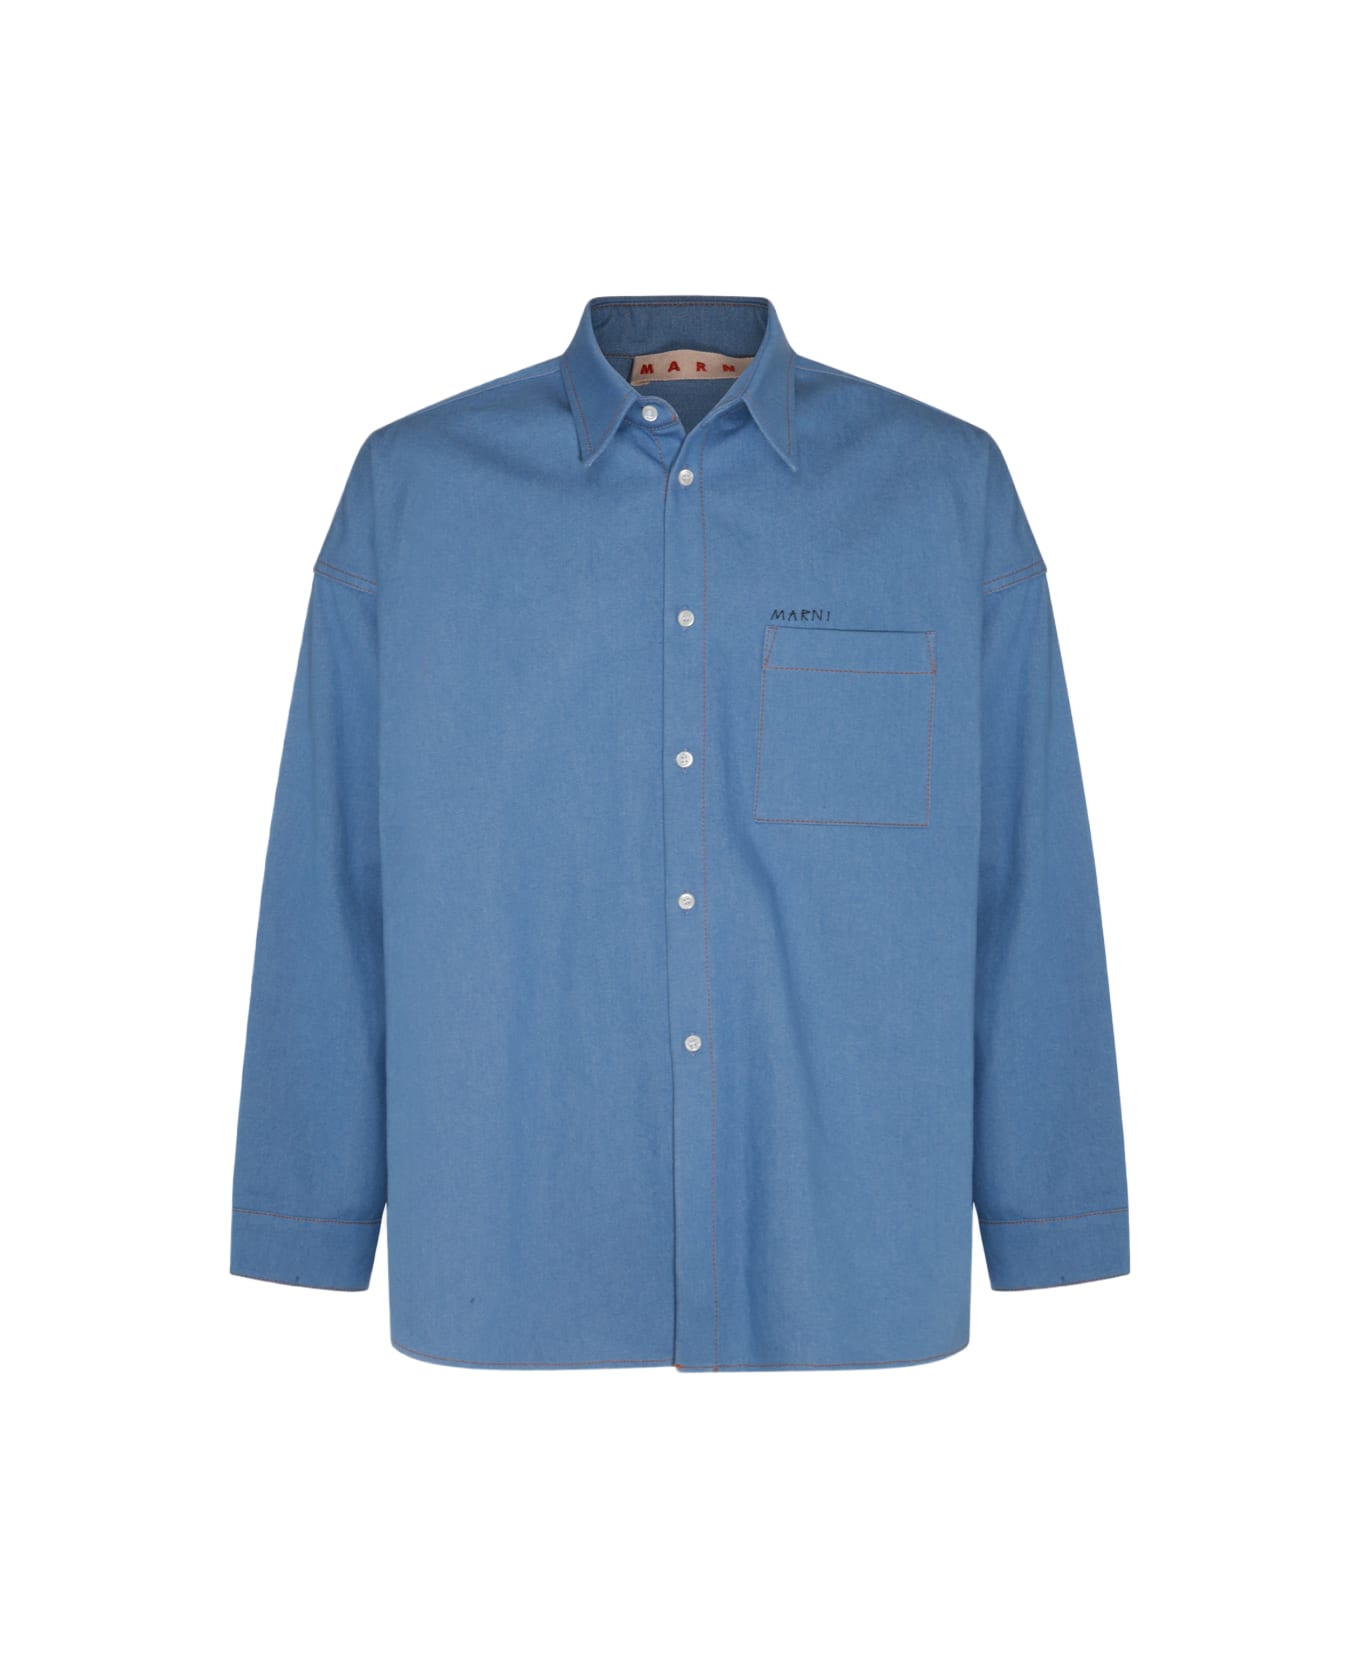 Marni Light Blue Cotton Shirt - AZURE